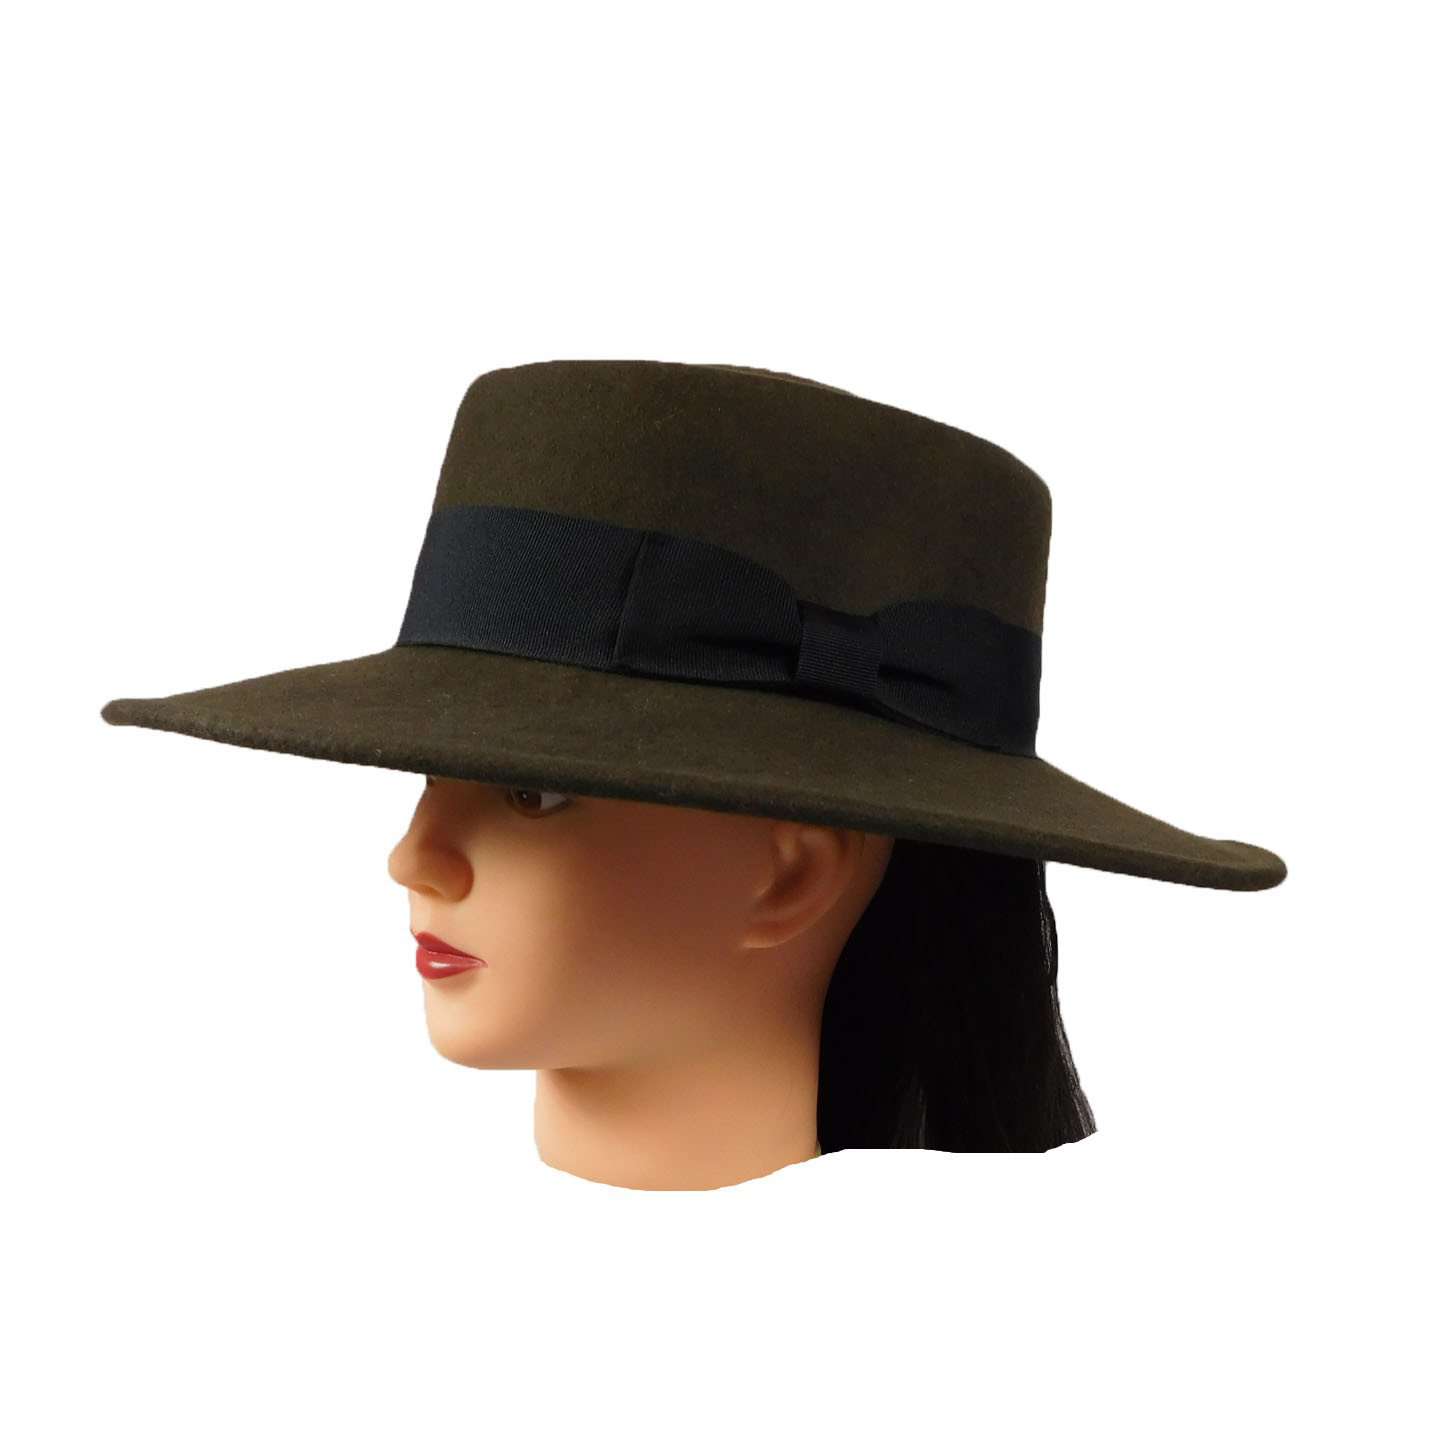 Wool Felt Bolero -Tan and Brown Bolero Hat SetarTrading Hats    